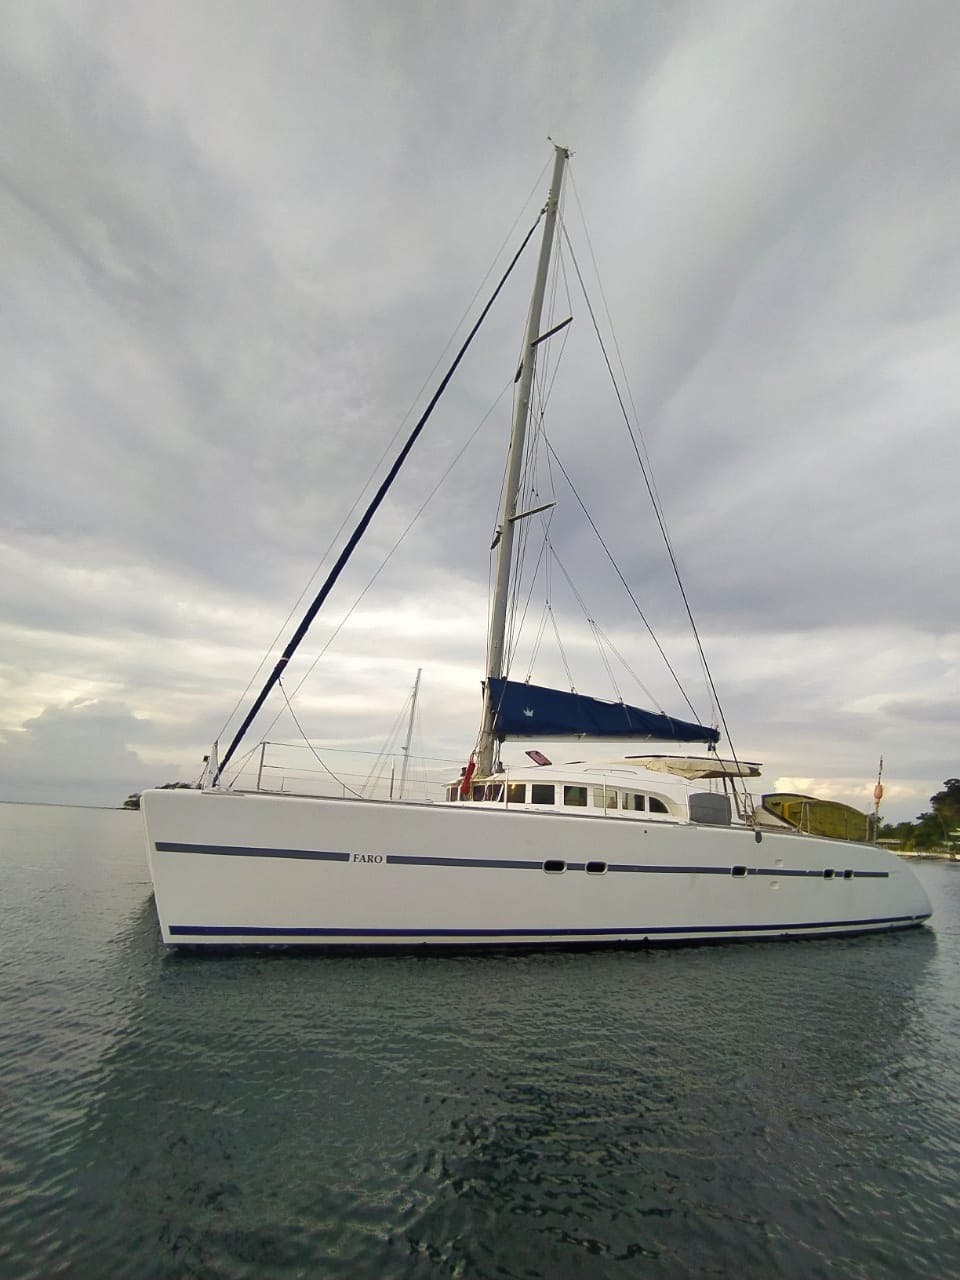 Book Lagoon 570 Catamaran for bareboat charter in San Blas, Corazon de Jesus, San Blas, Panama with TripYacht!, picture 1